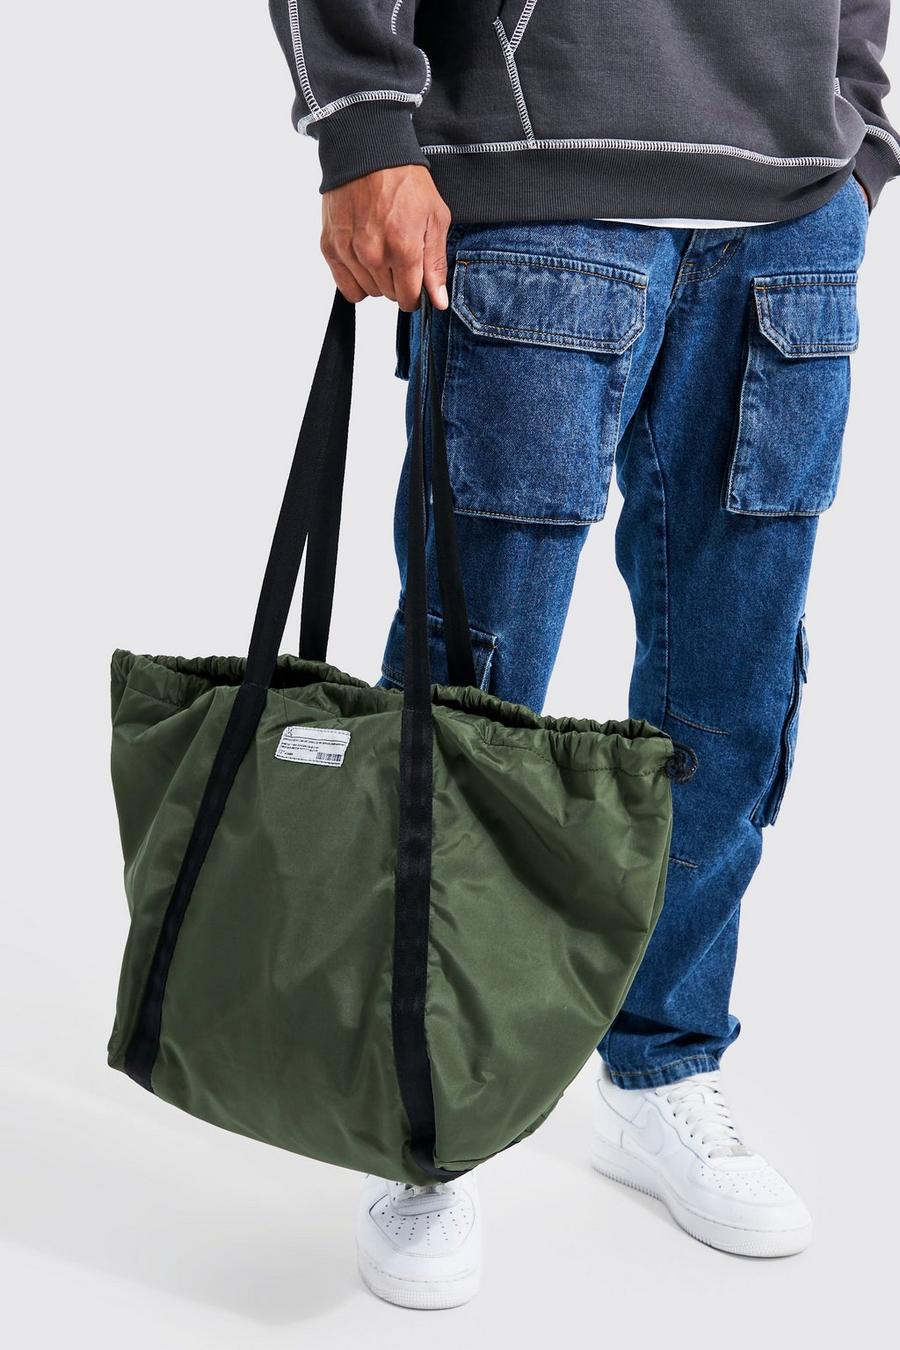 Khaki Adjustable Nylon Tote Bag